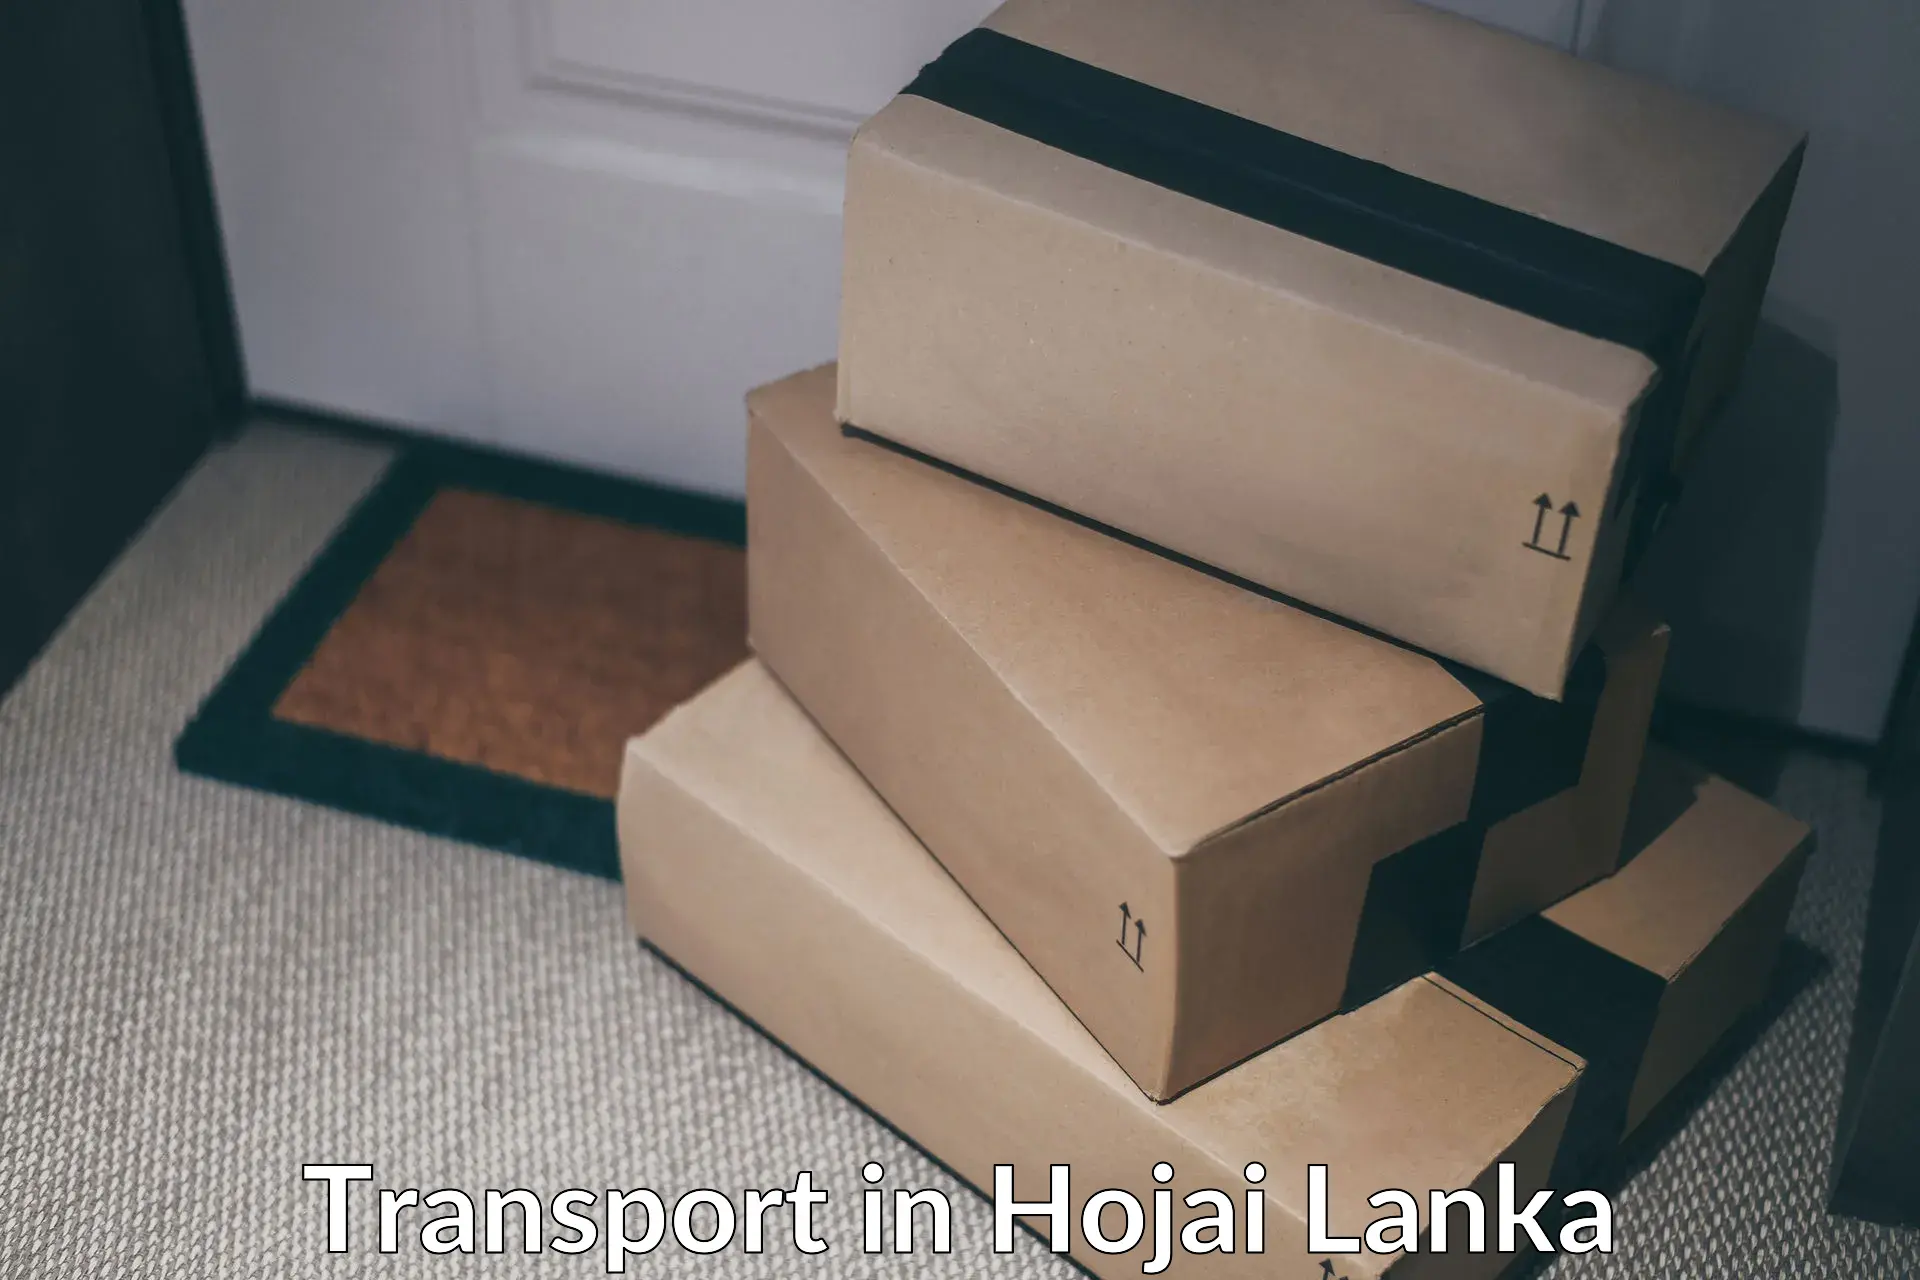 Nearest transport service in Hojai Lanka